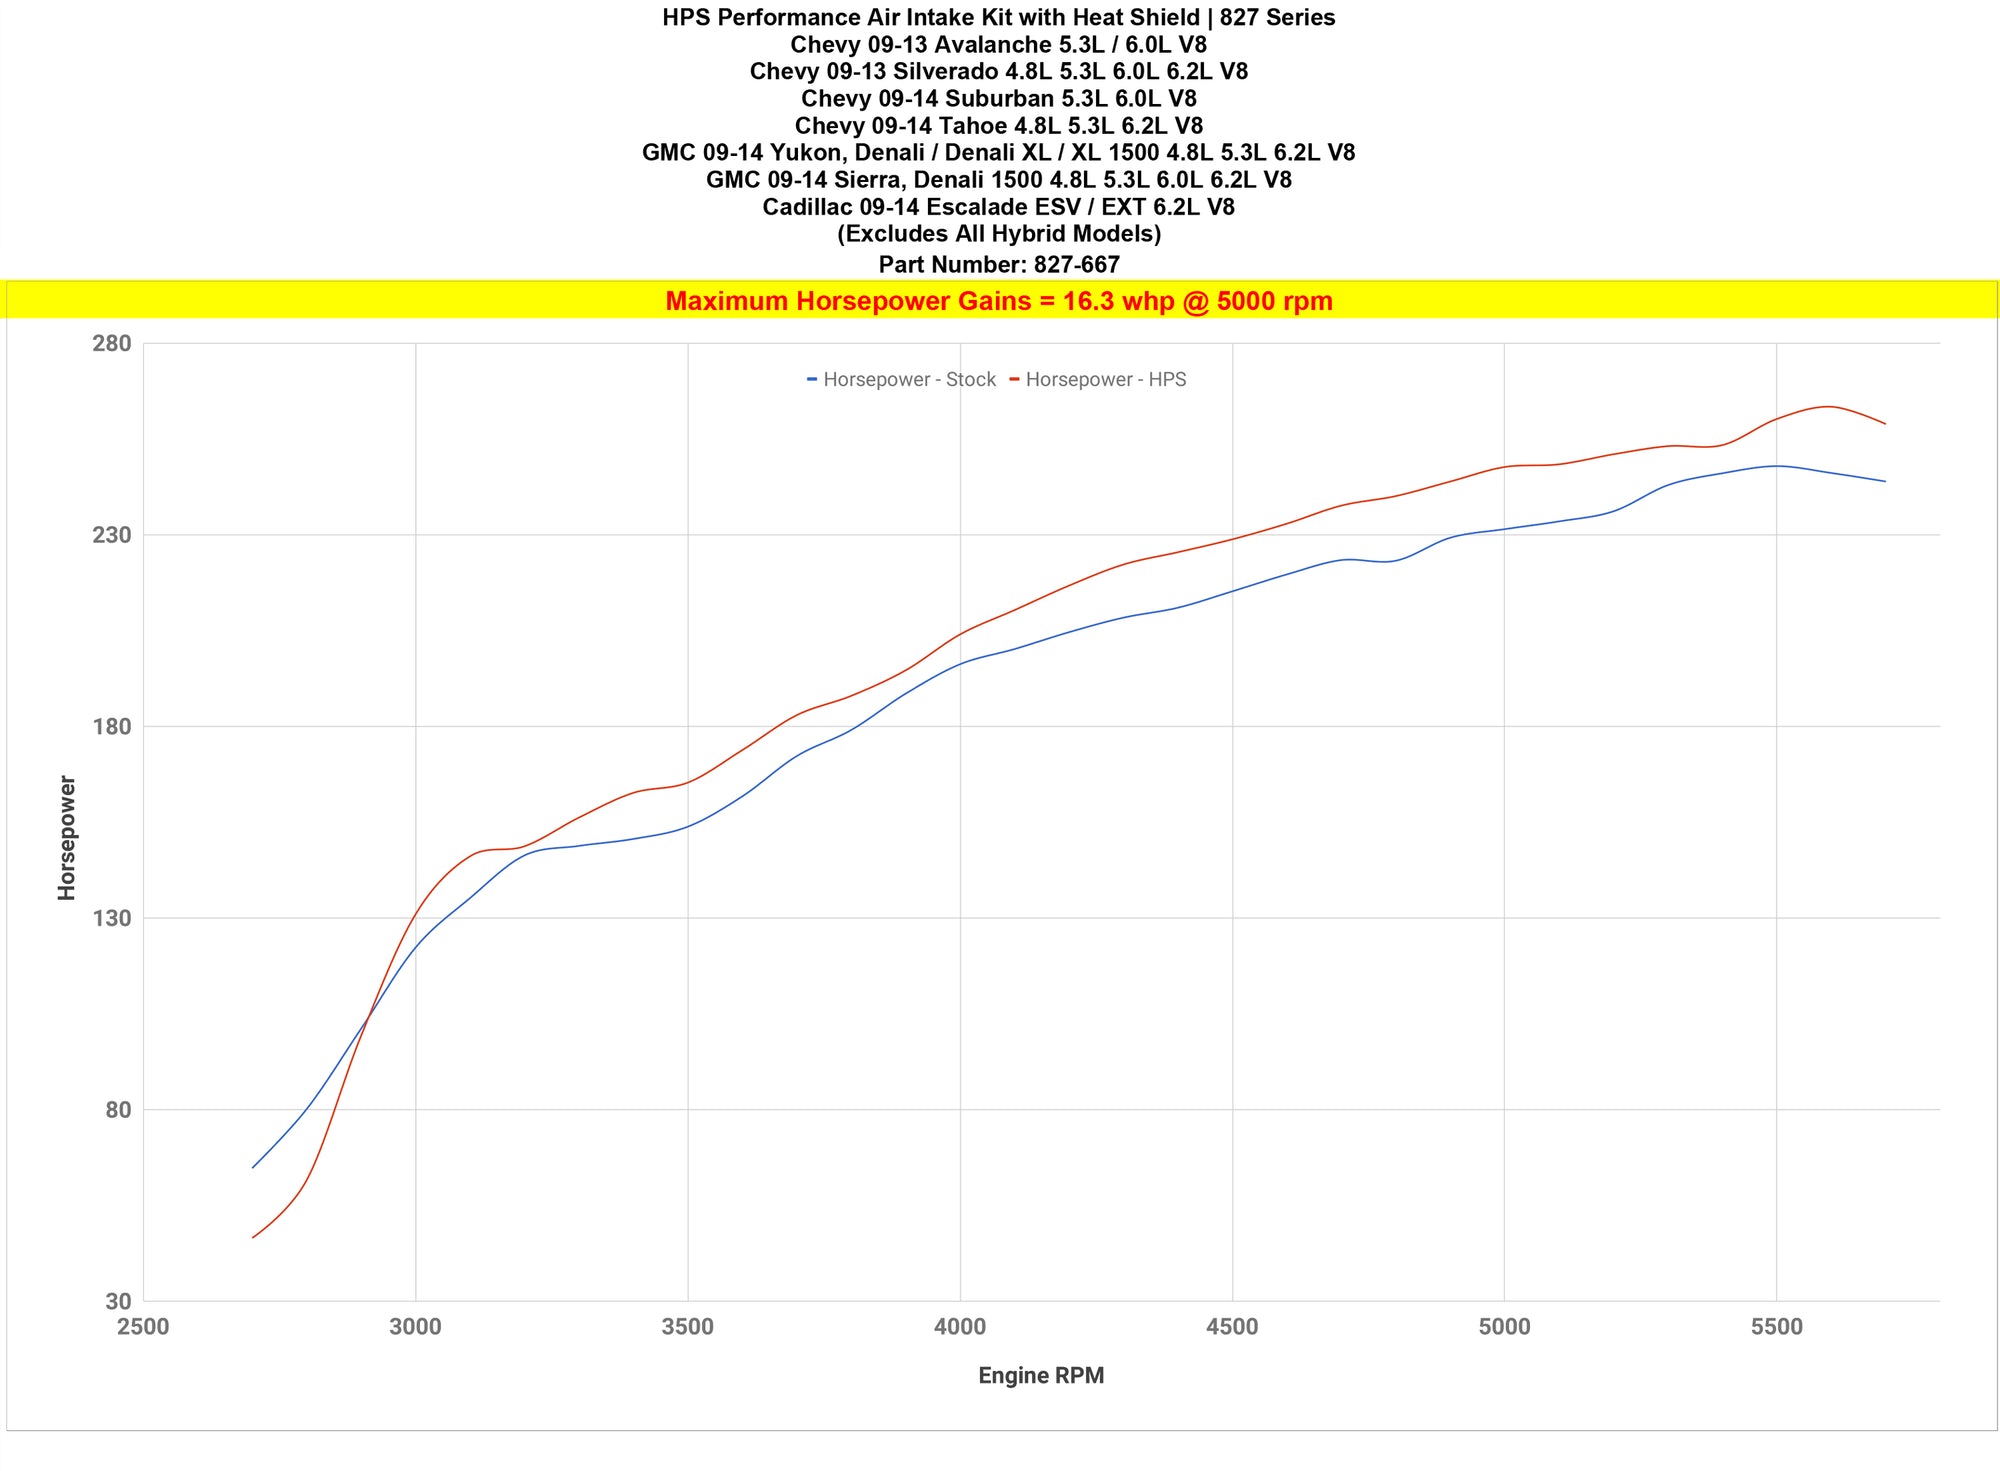 Dyno proven gains 16.3 whp HPS Performance Shortram Air Intake Kit 2009-2013 Chevy Silverado 4.8L 5.3L 6.0L 6.2L V8 827-667WB